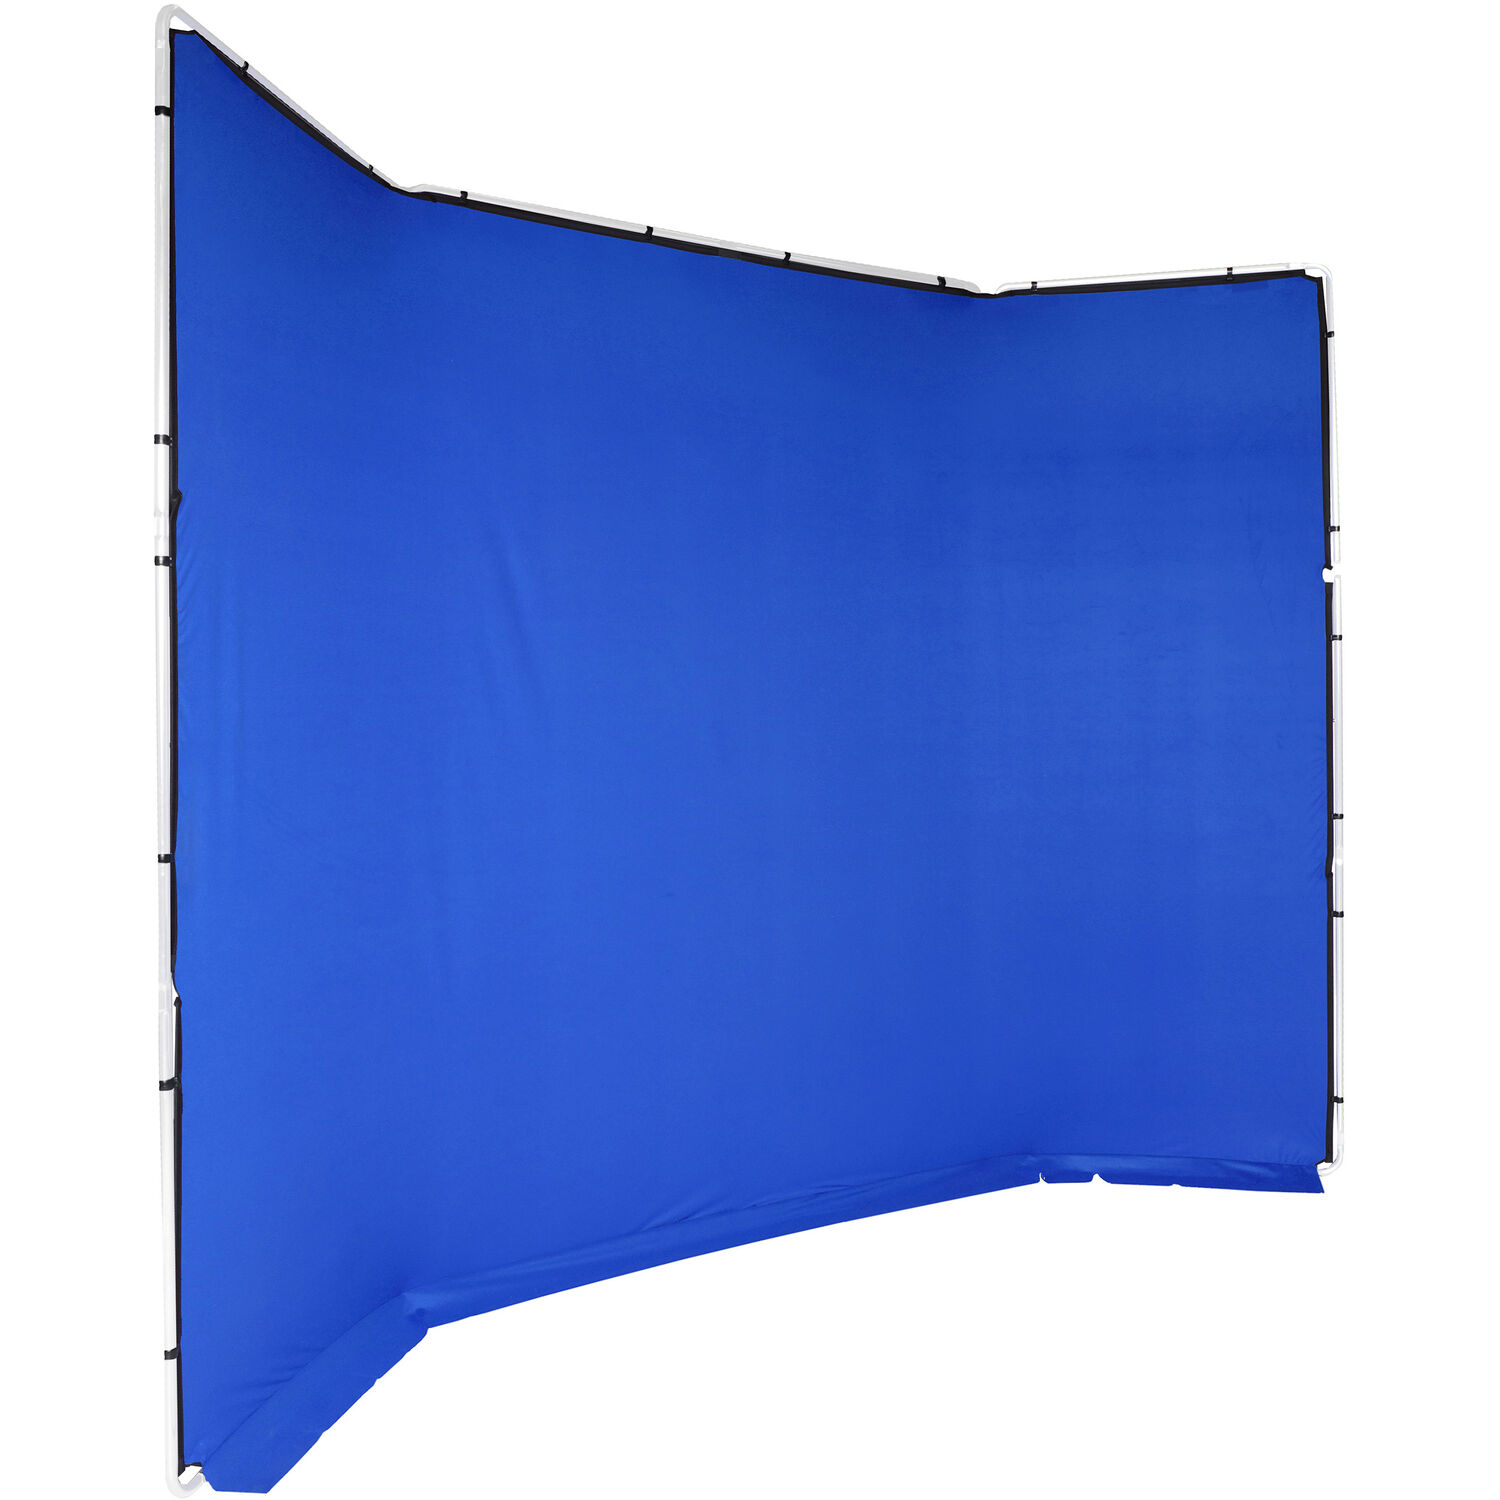 Manfrotto MLBG4301CB Chroma Key FX 4x2.9m Background Cover Blue хромакей синий